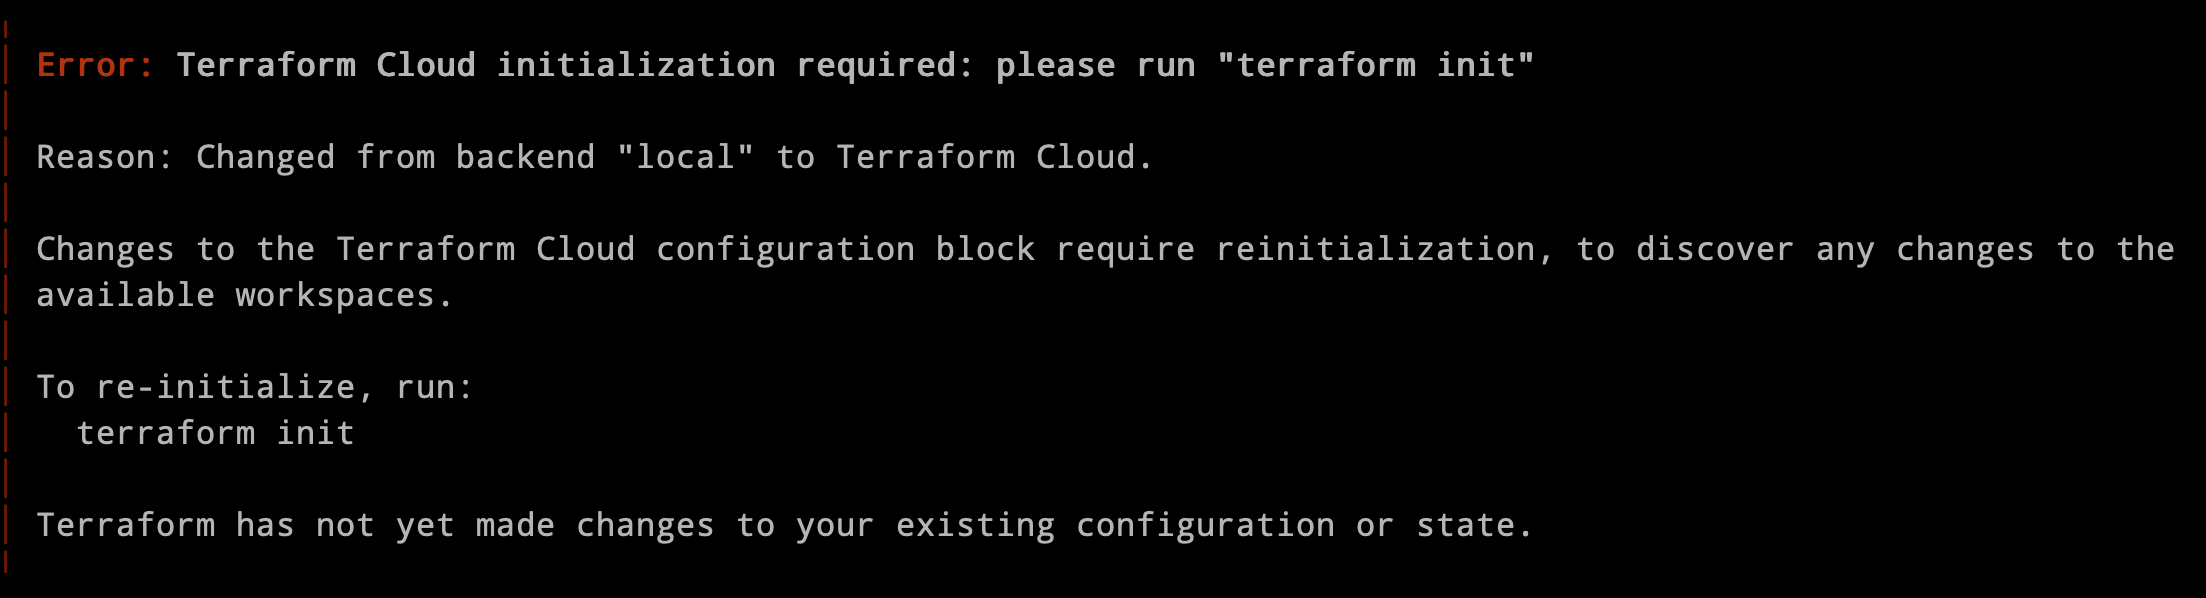 Improved Terraform error message